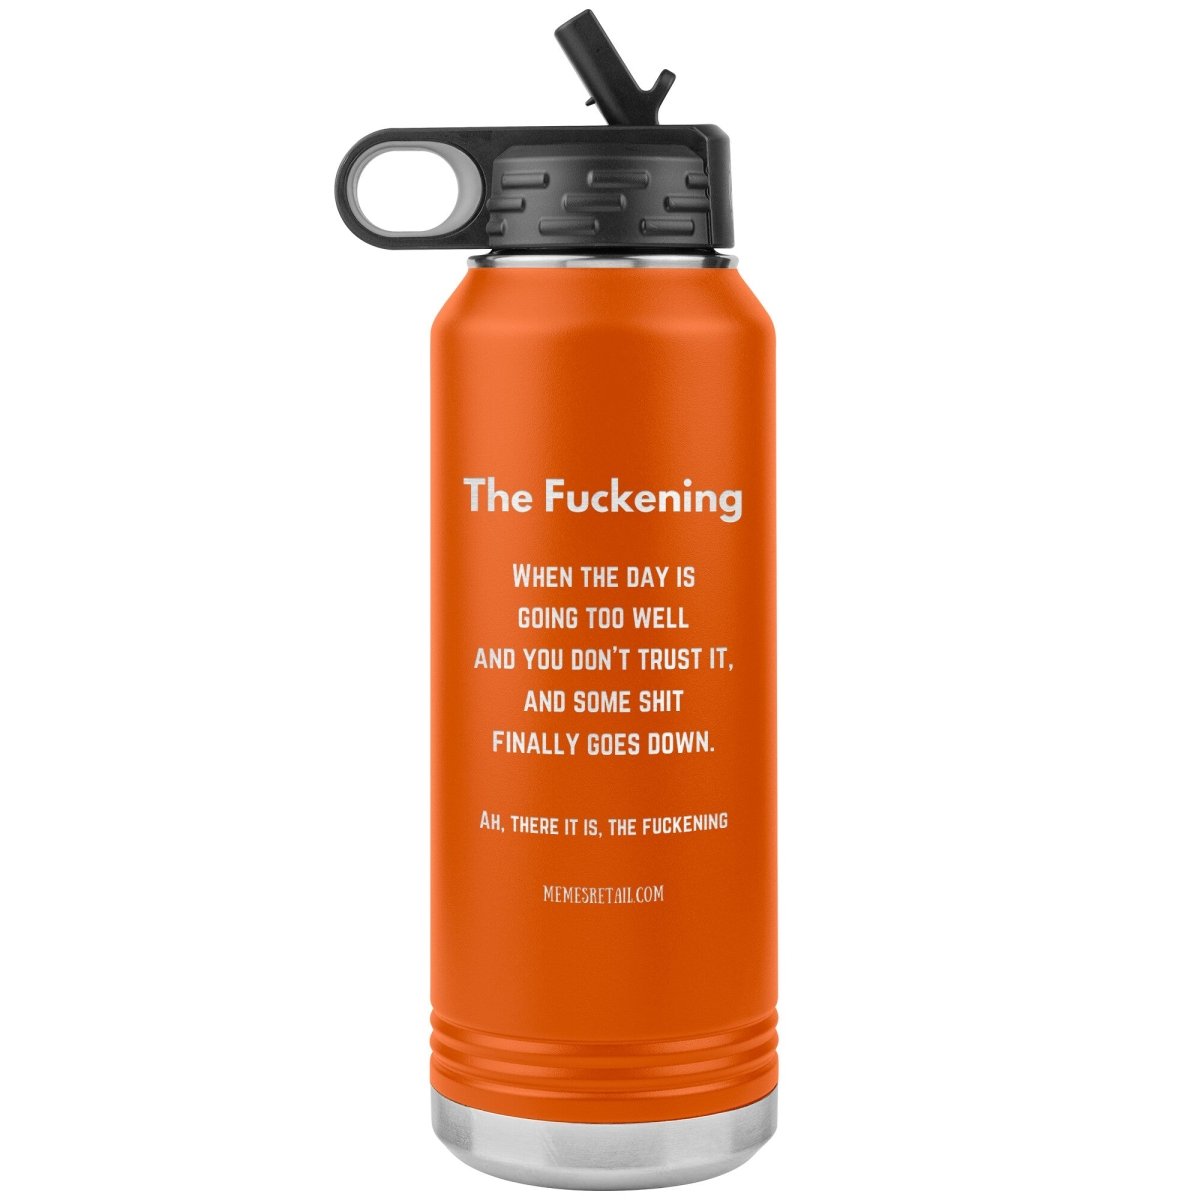 The Fuckening, When you don't trust the day. 32 oz Water Bottle, Orange - MemesRetail.com